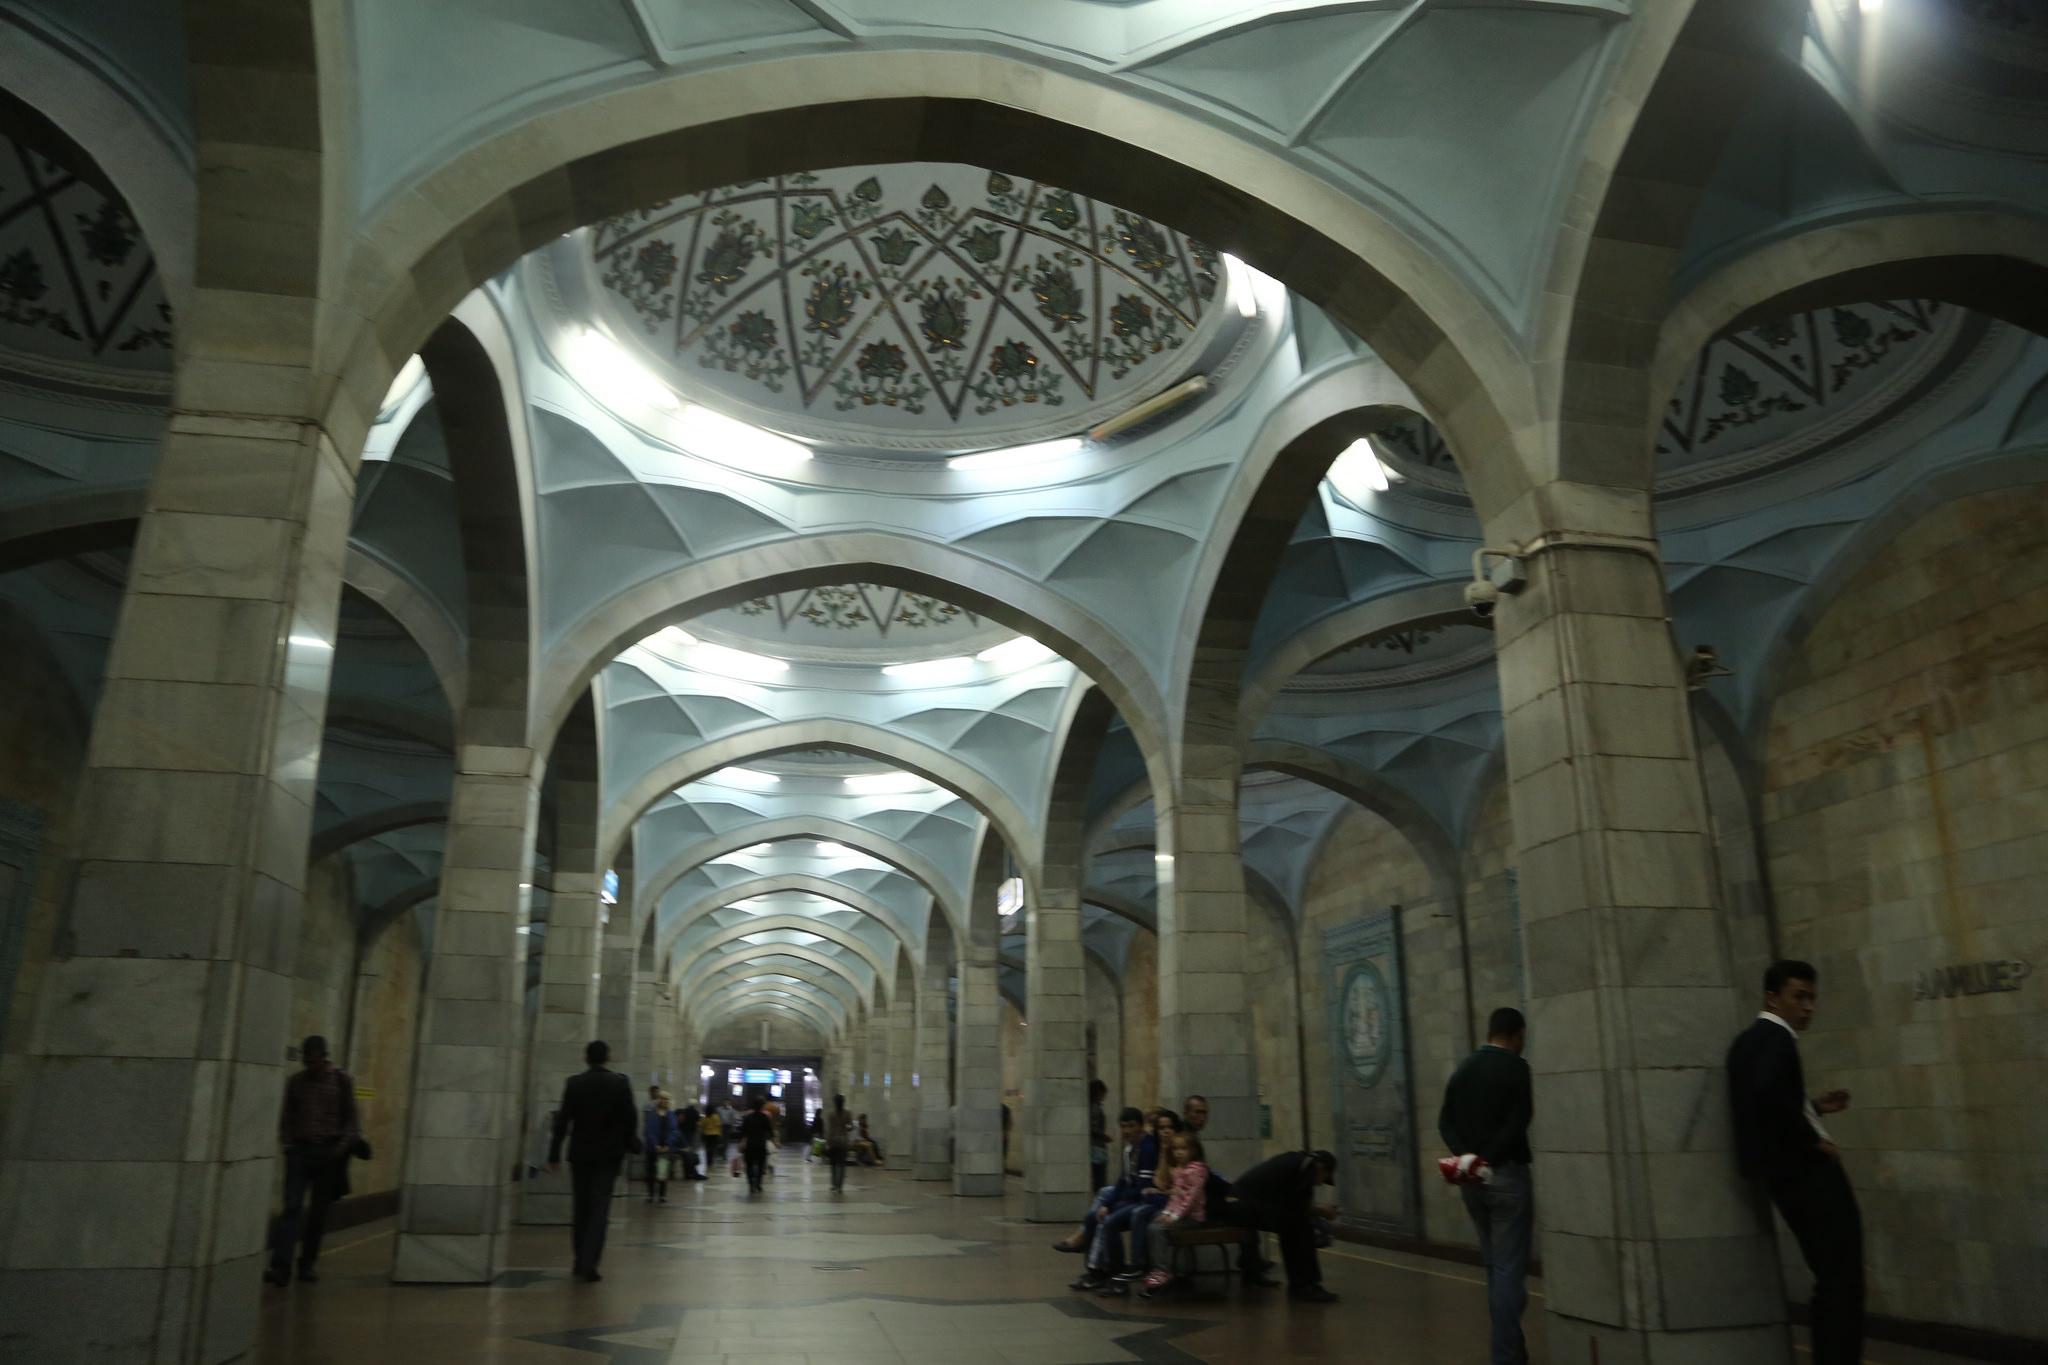  Interior design of subway stations